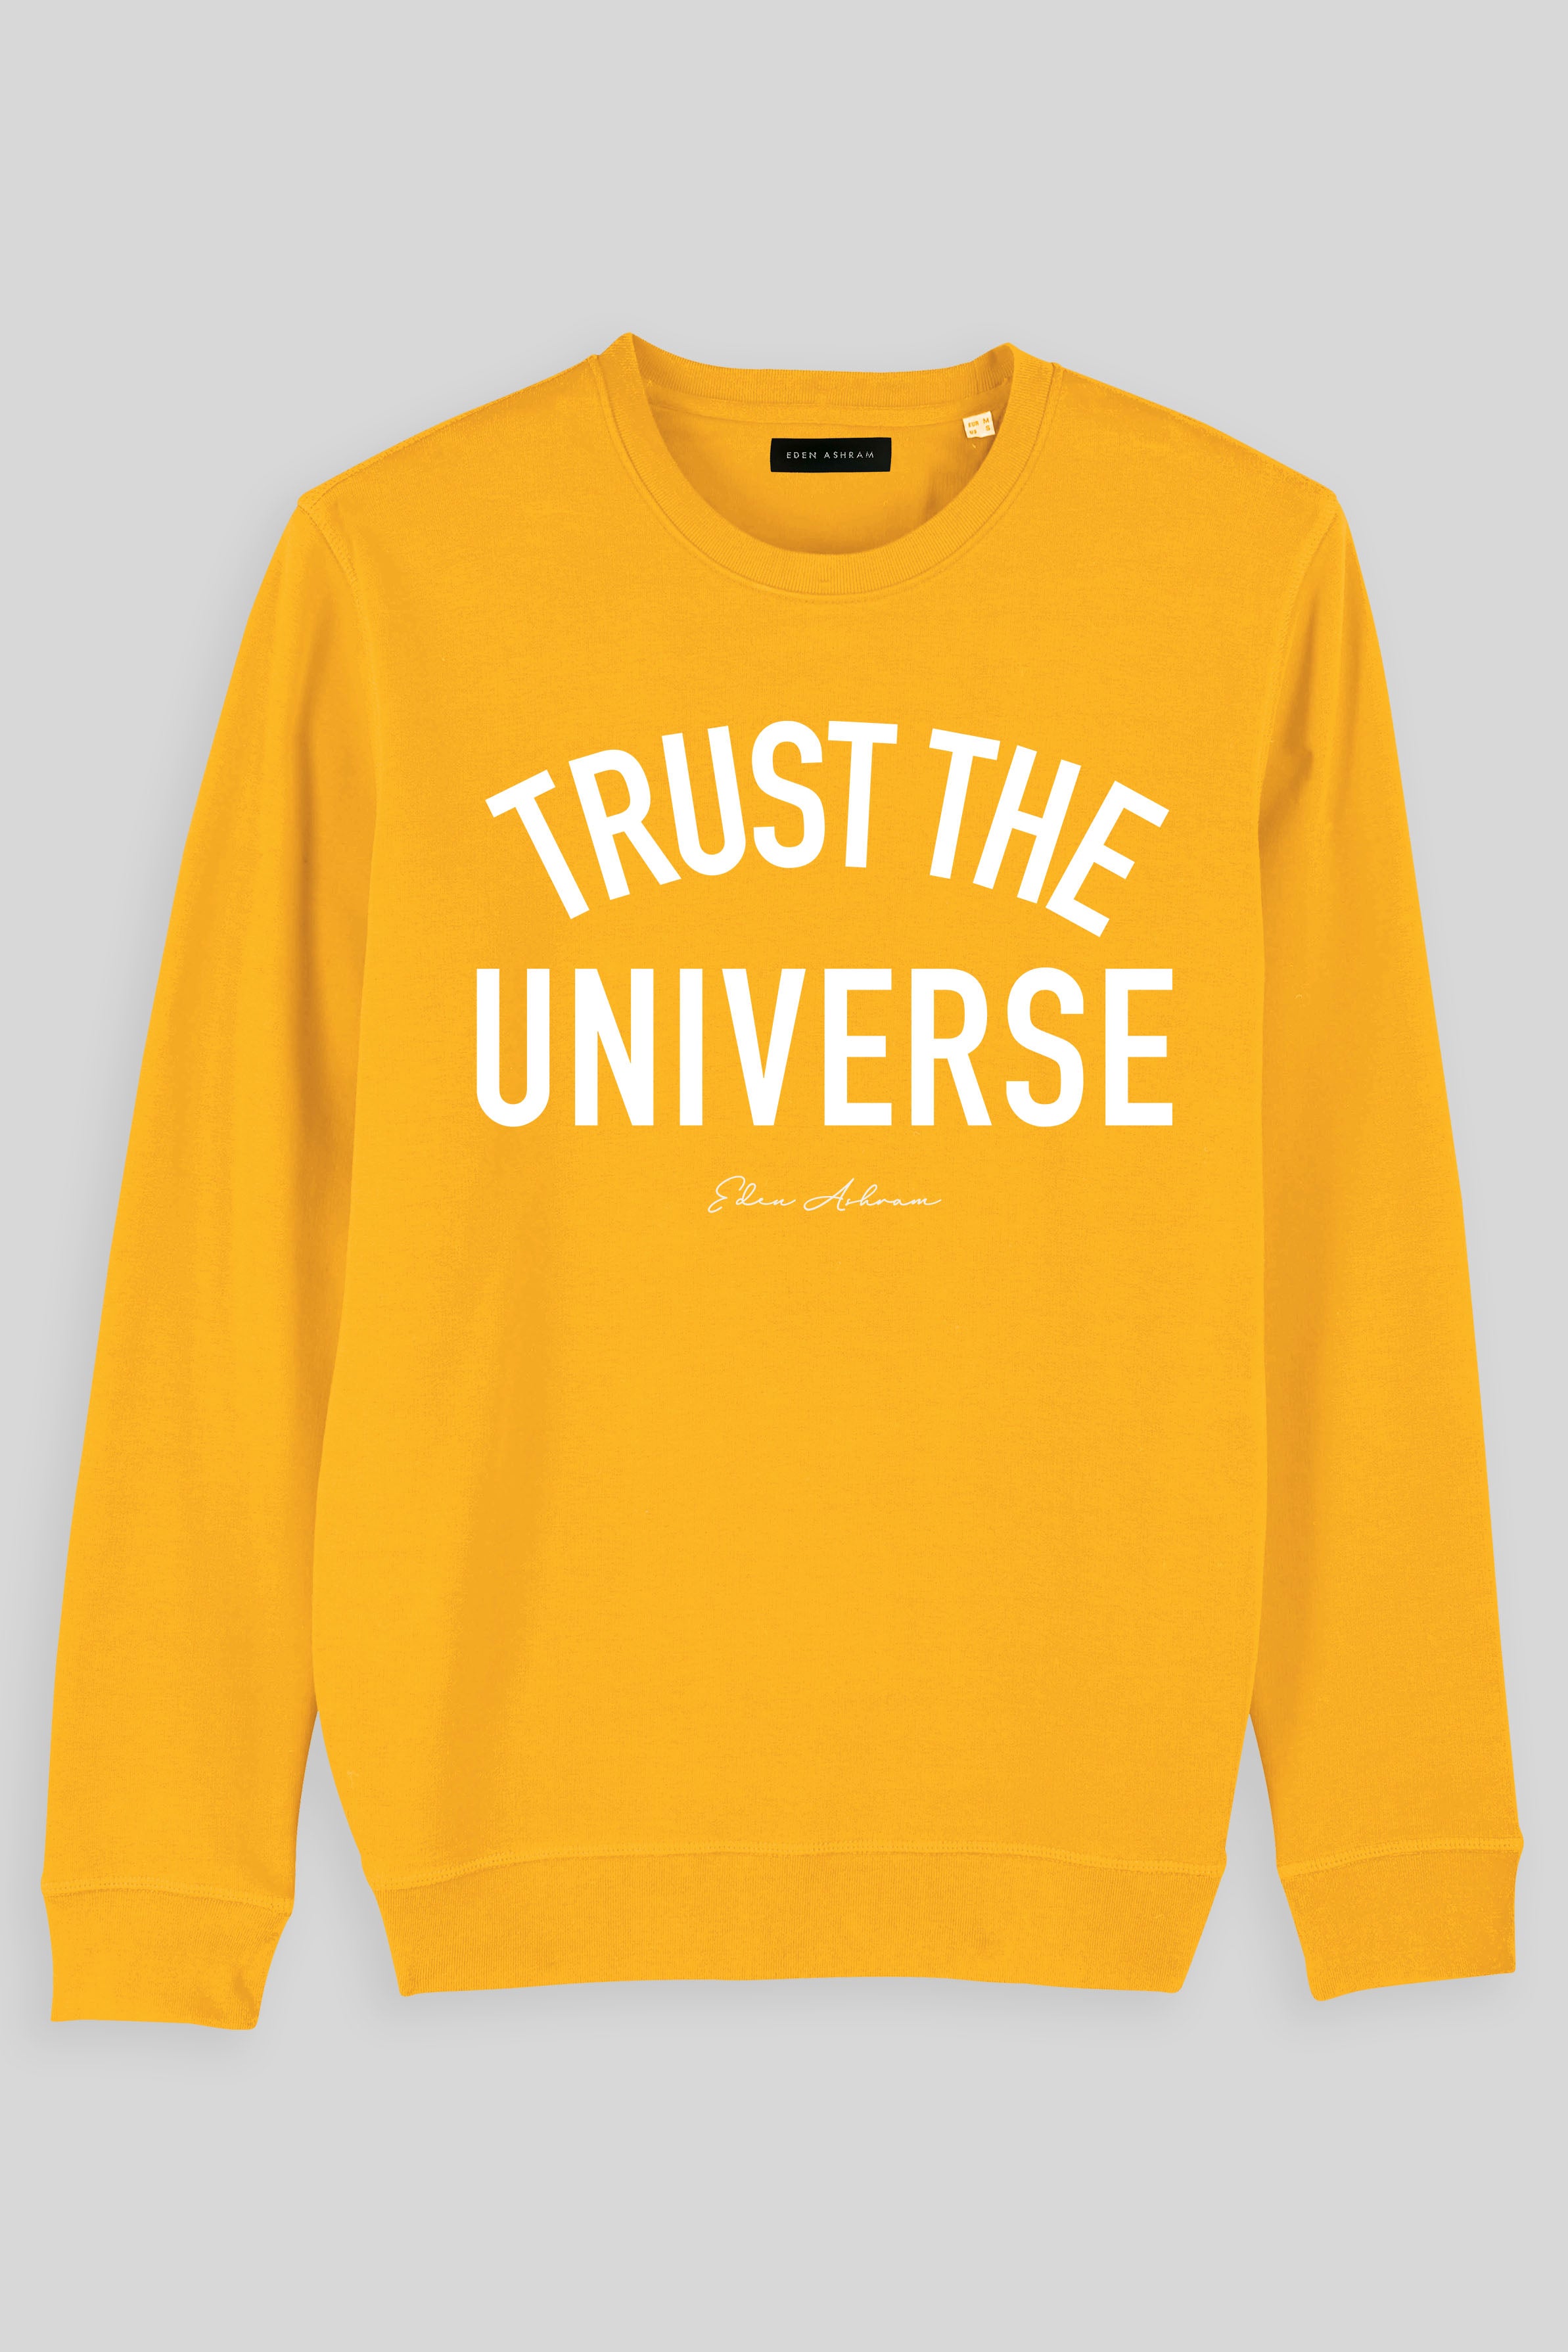 EDEN ASHRAM Trust The Universe Premium Crew Neck Sweatshirt Spectra Yellow